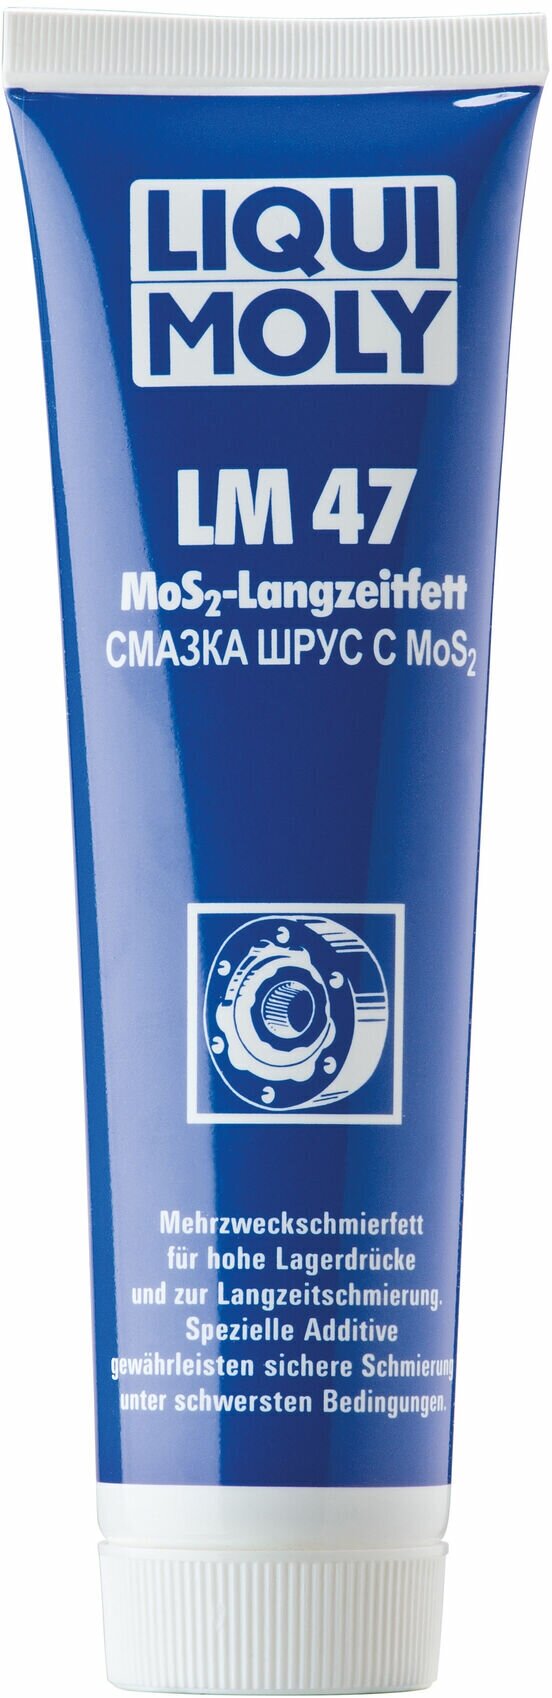 1987 LiquiMoly Смазка ШРУС с дисульфидом молибдена LM 47 Langzeitfett + MoS2 0,1кг